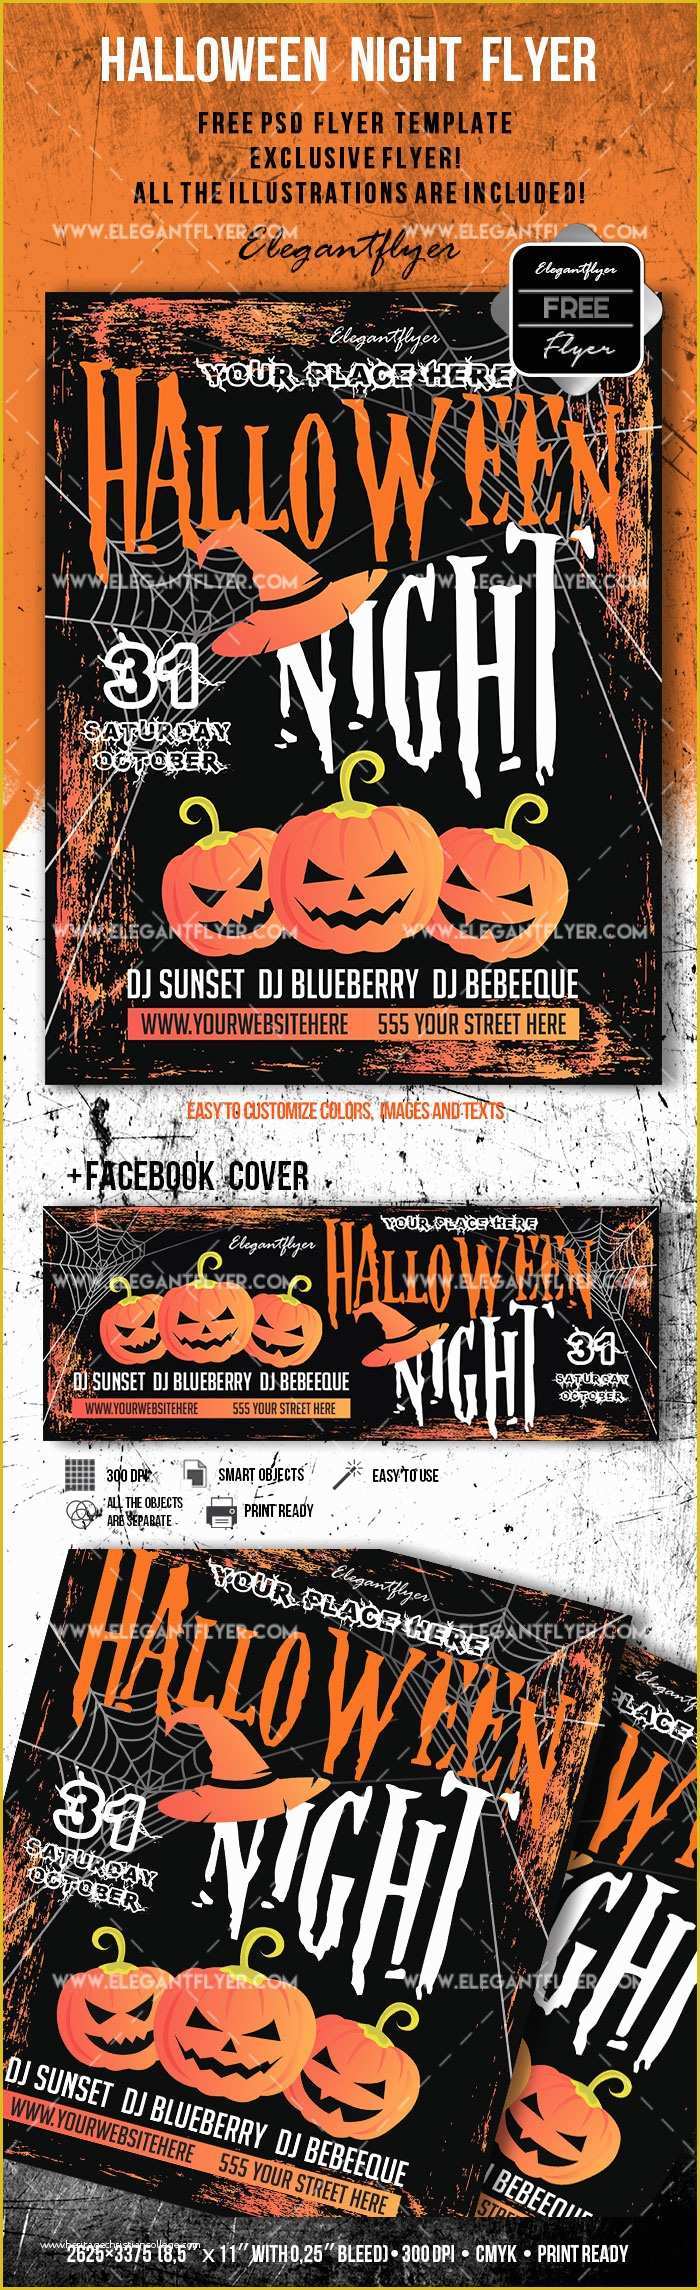 Halloween Flyer Template Free Of Halloween – Free Flyer Psd Template – by Elegantflyer